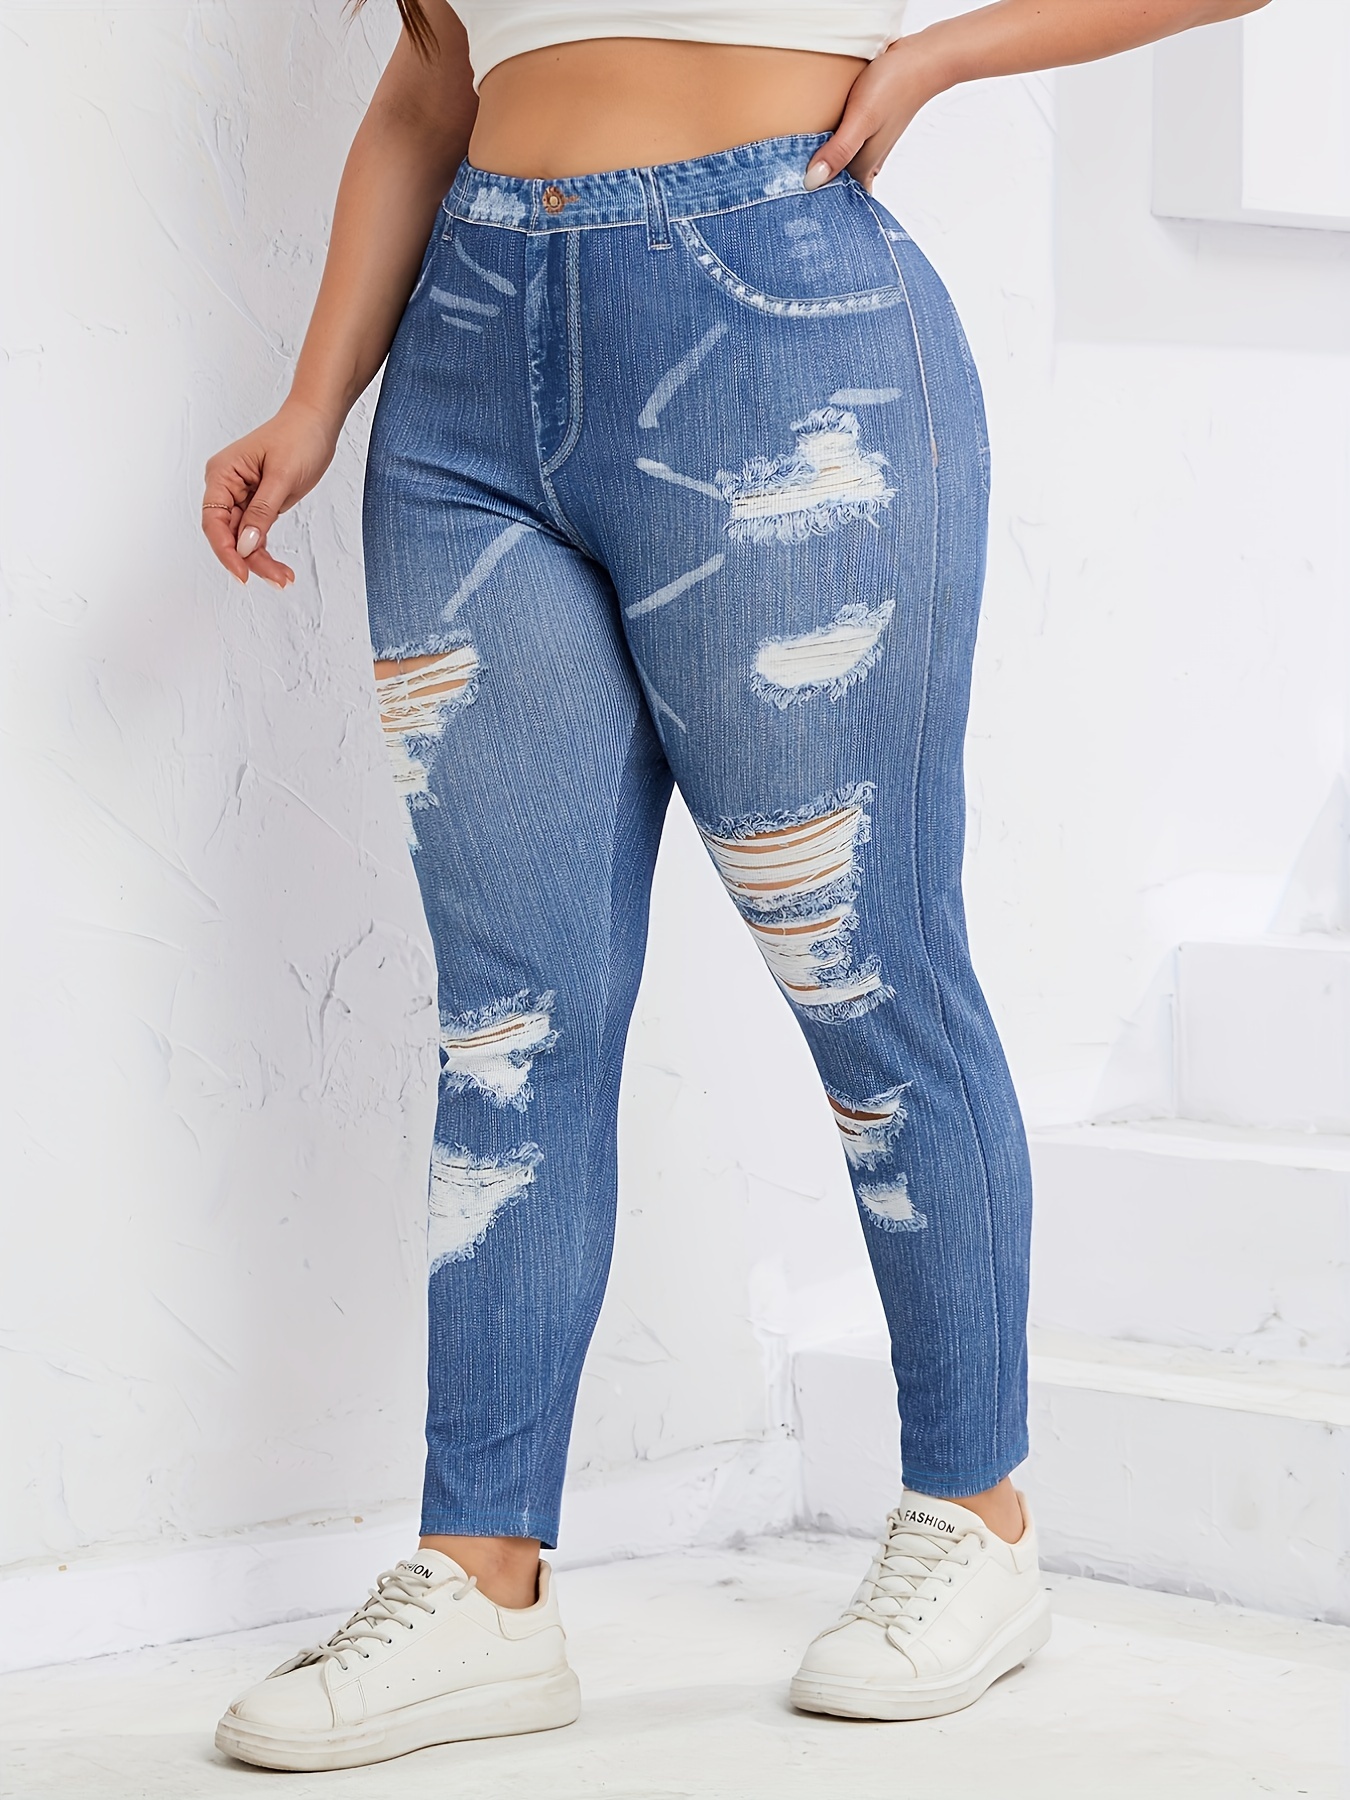 Niuer Women Cross 3D Printed Jeans Ladies Stretch Leggings Slim Leg Running  With Pockets Casual Denim Trousers 